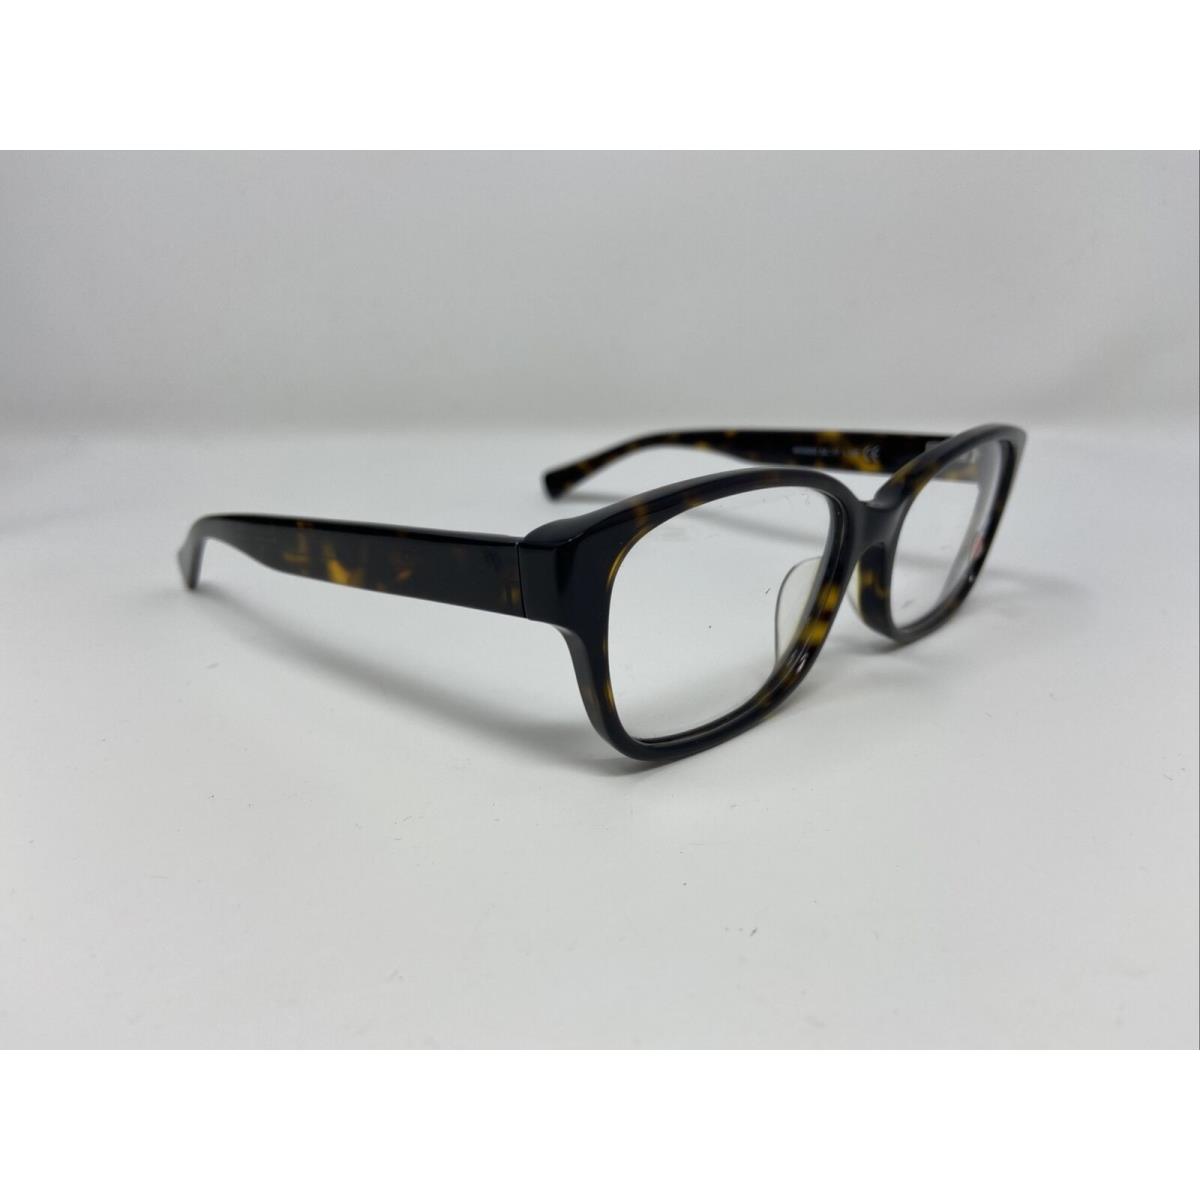 Maui Jim eyeglasses  - Brown Frame 2